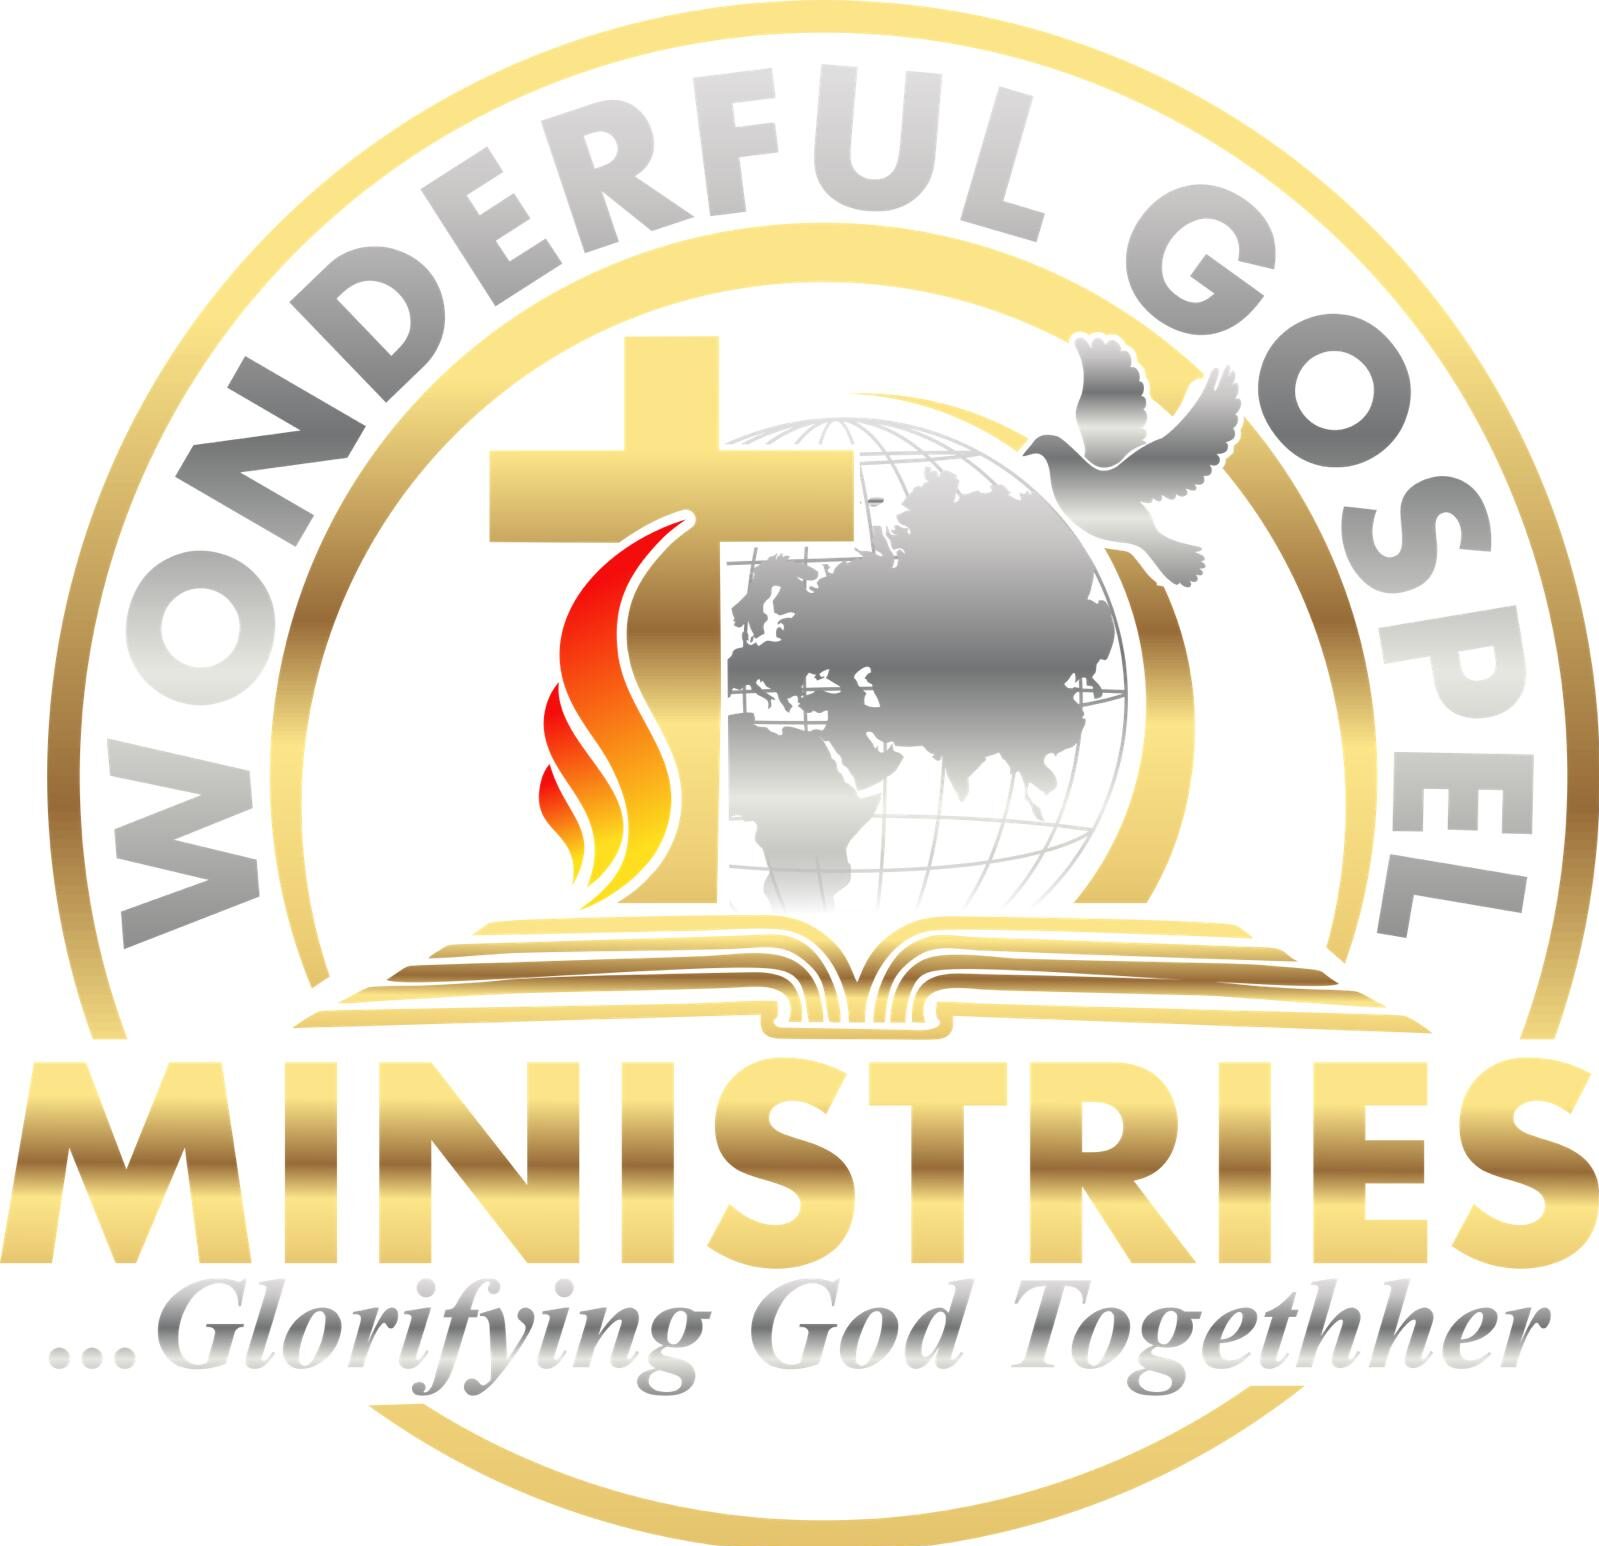 Wonderful Gospel Ministries